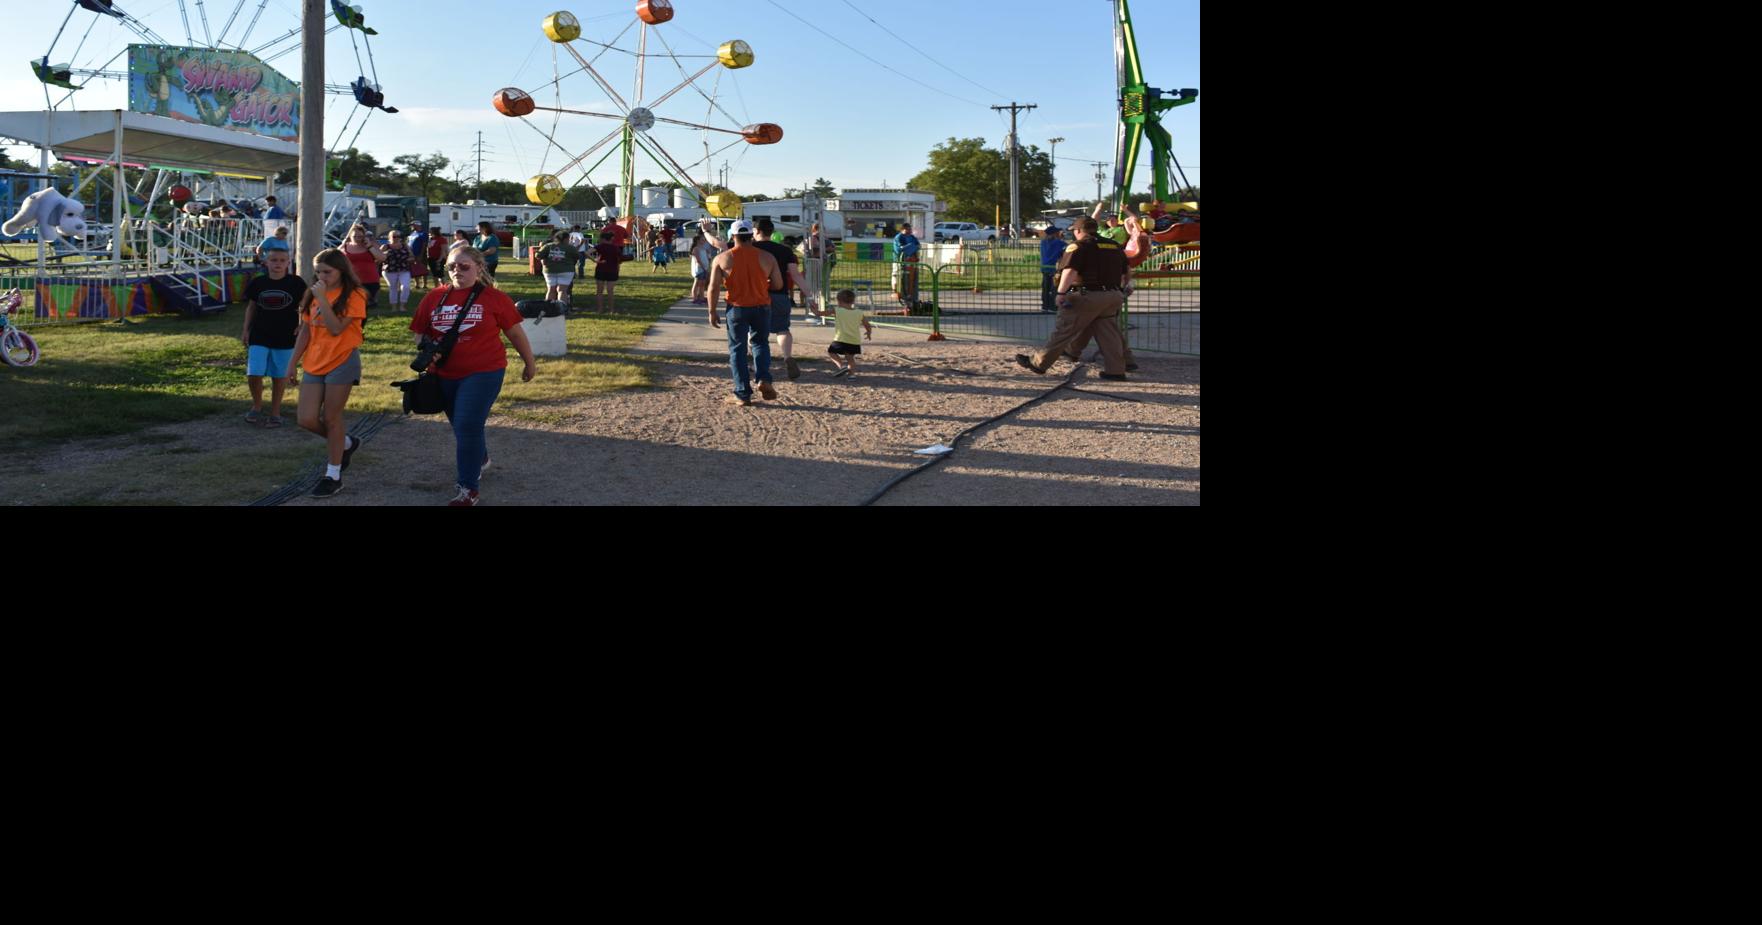 Jefferson County Fair starts this week